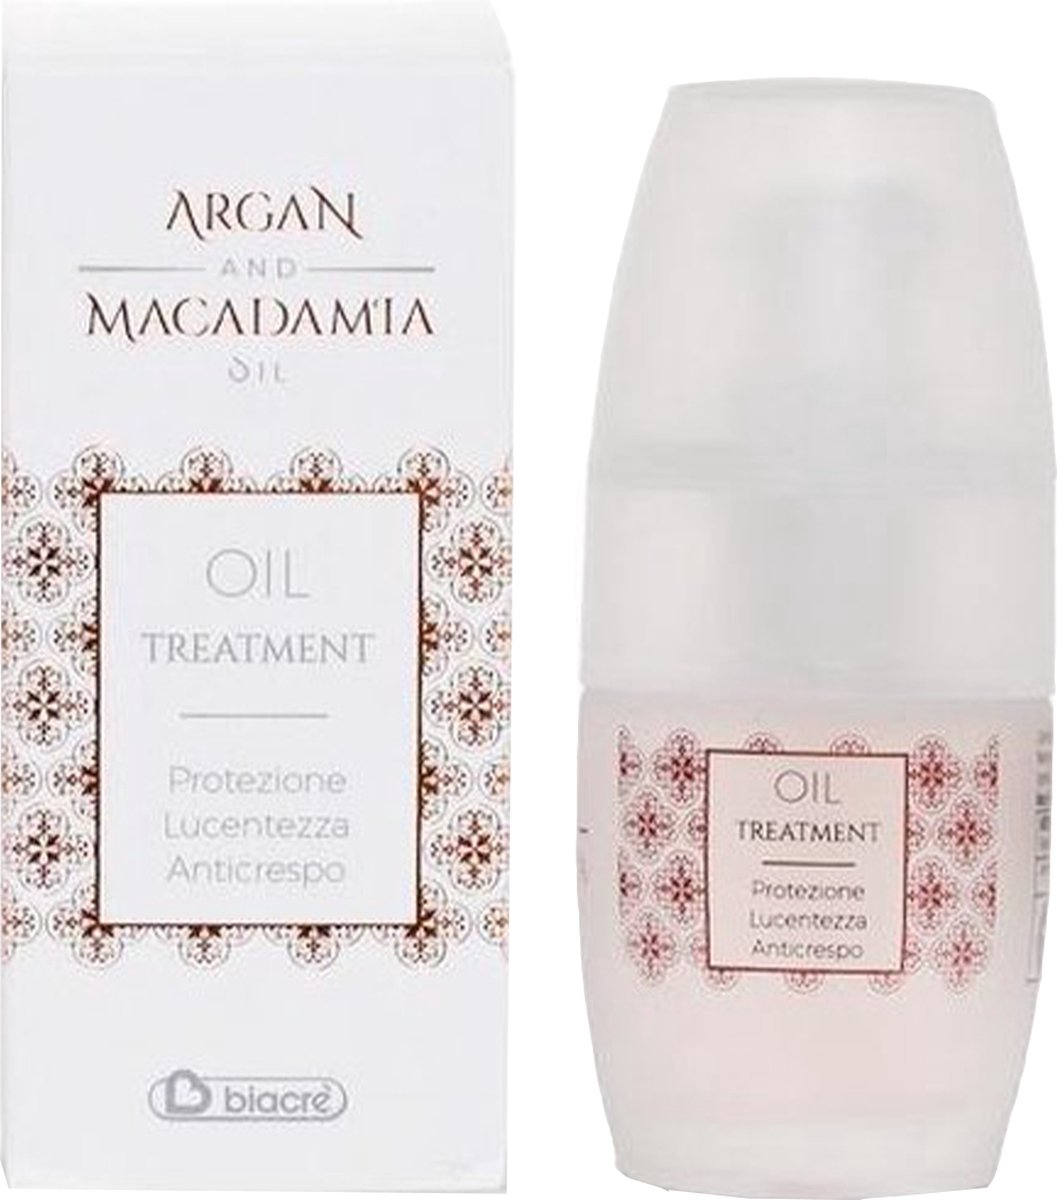 Biacre - Argan & Macadamia Oil - Treatment - 30 ml